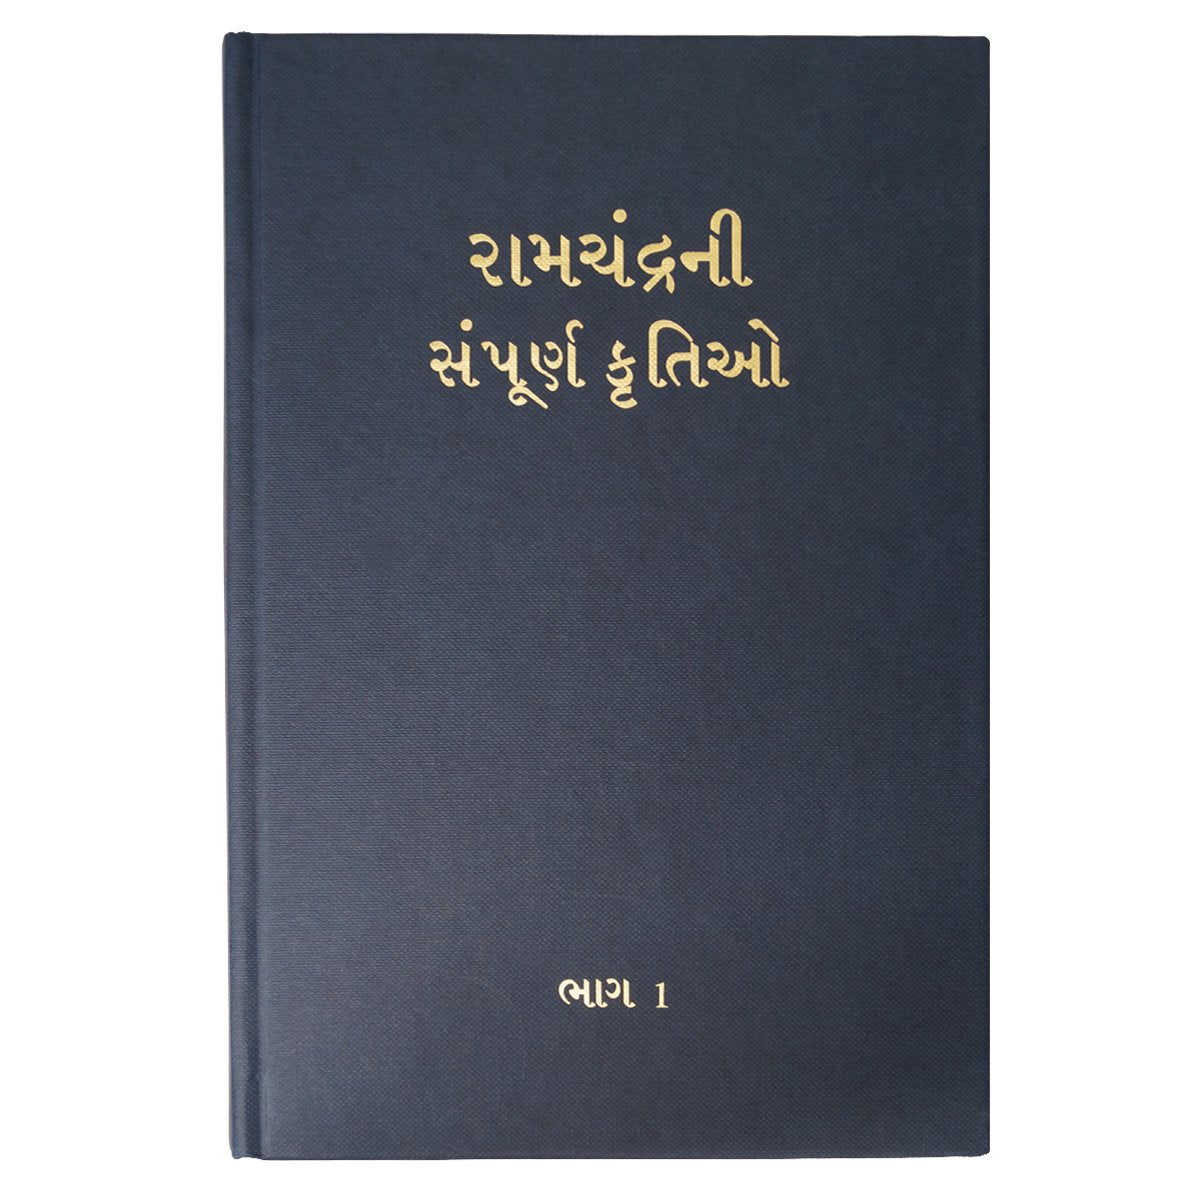 Complete Works of Ram Chandra (Babuji) - Volume 1 - hfnl!fe